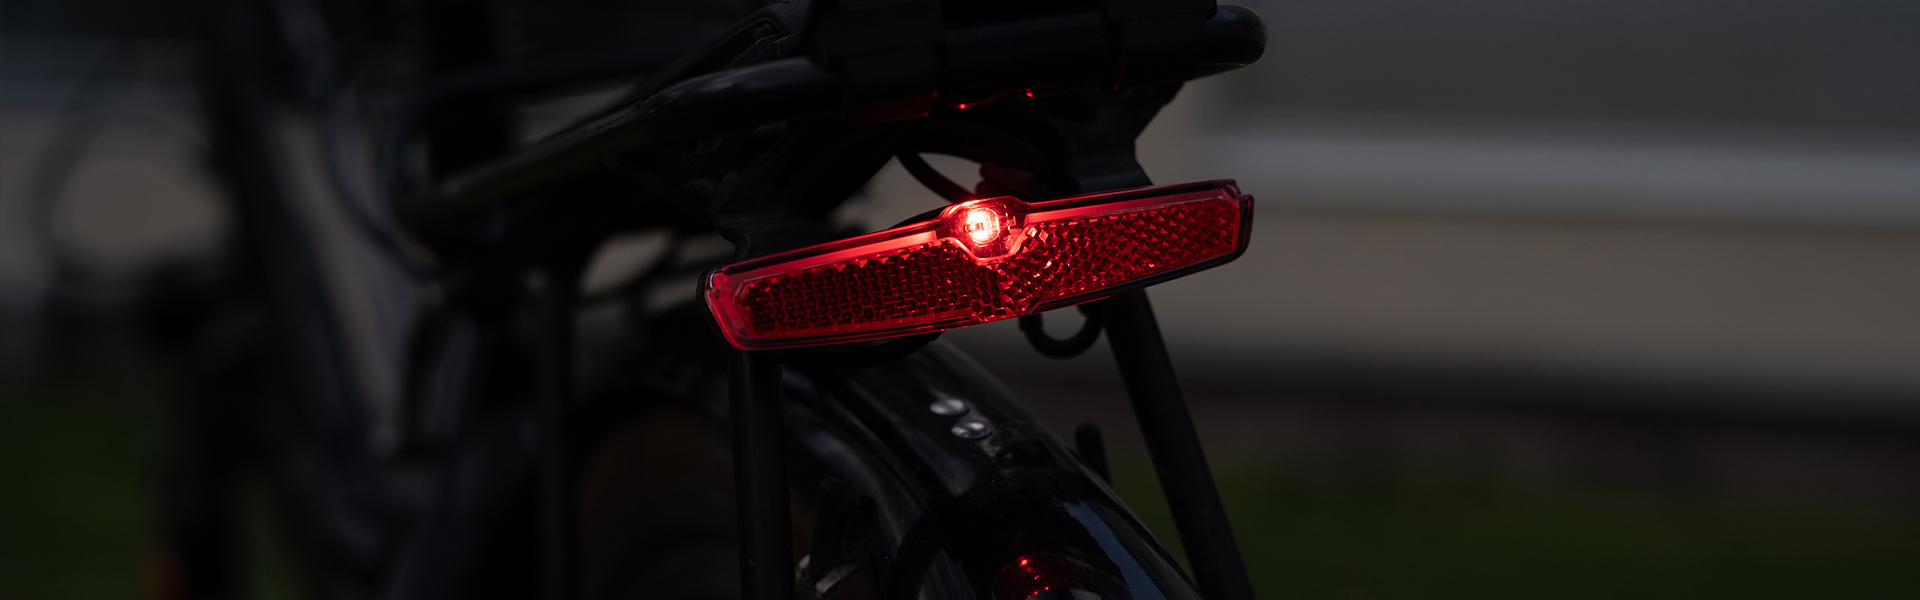 Sate-lite 1000 lumen  USB rechargeable bike light  eletric bike front light CREE LED waterproof